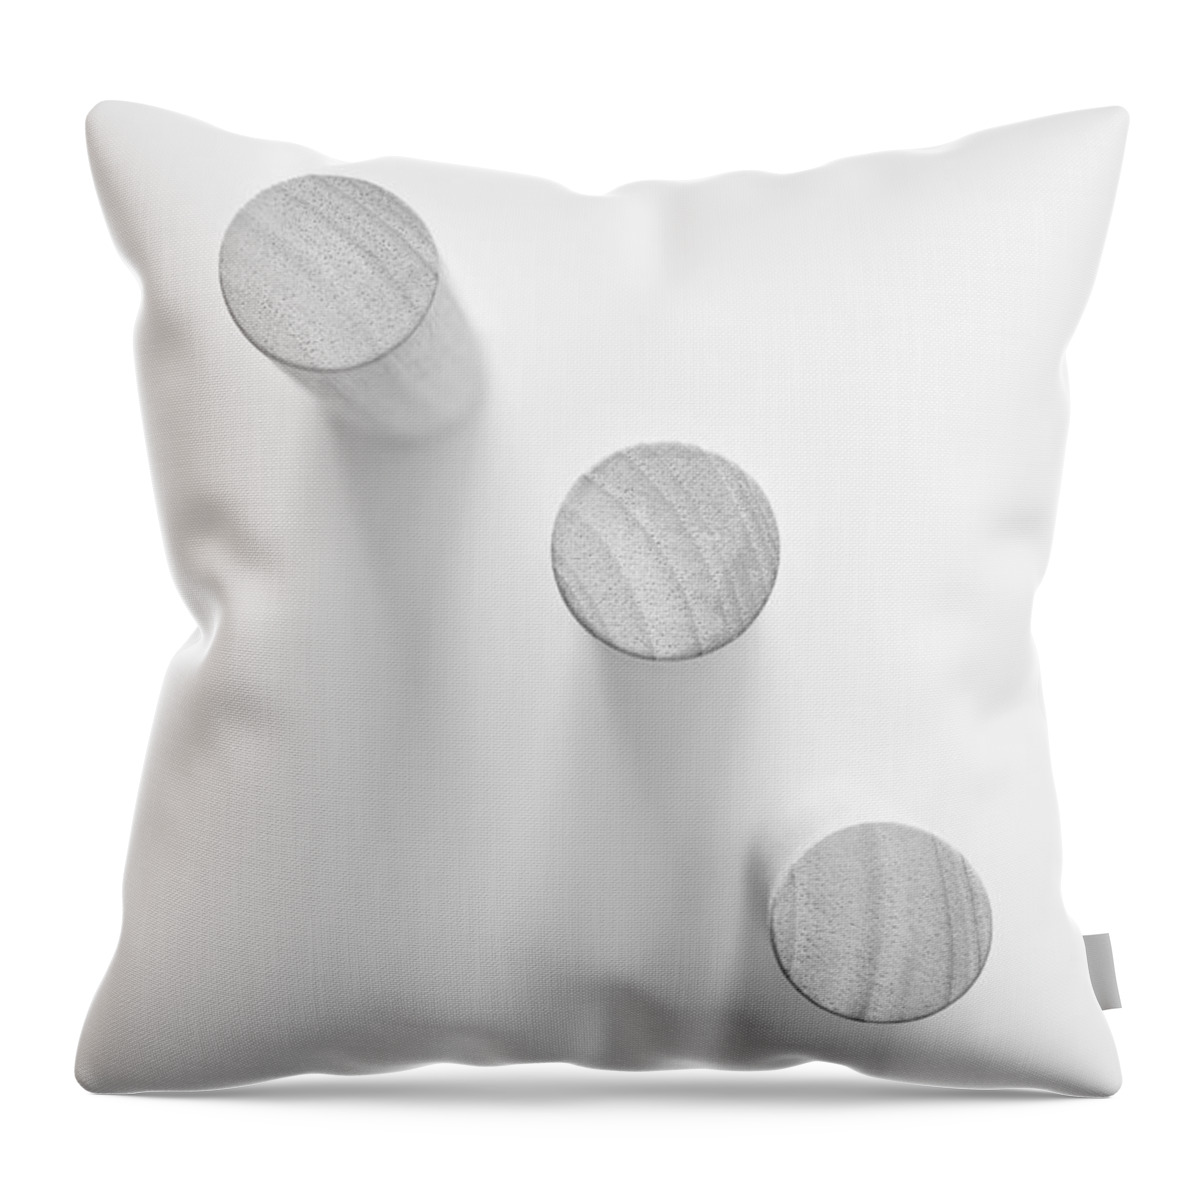 Minimal Throw Pillow featuring the photograph Pillars by Scott Norris